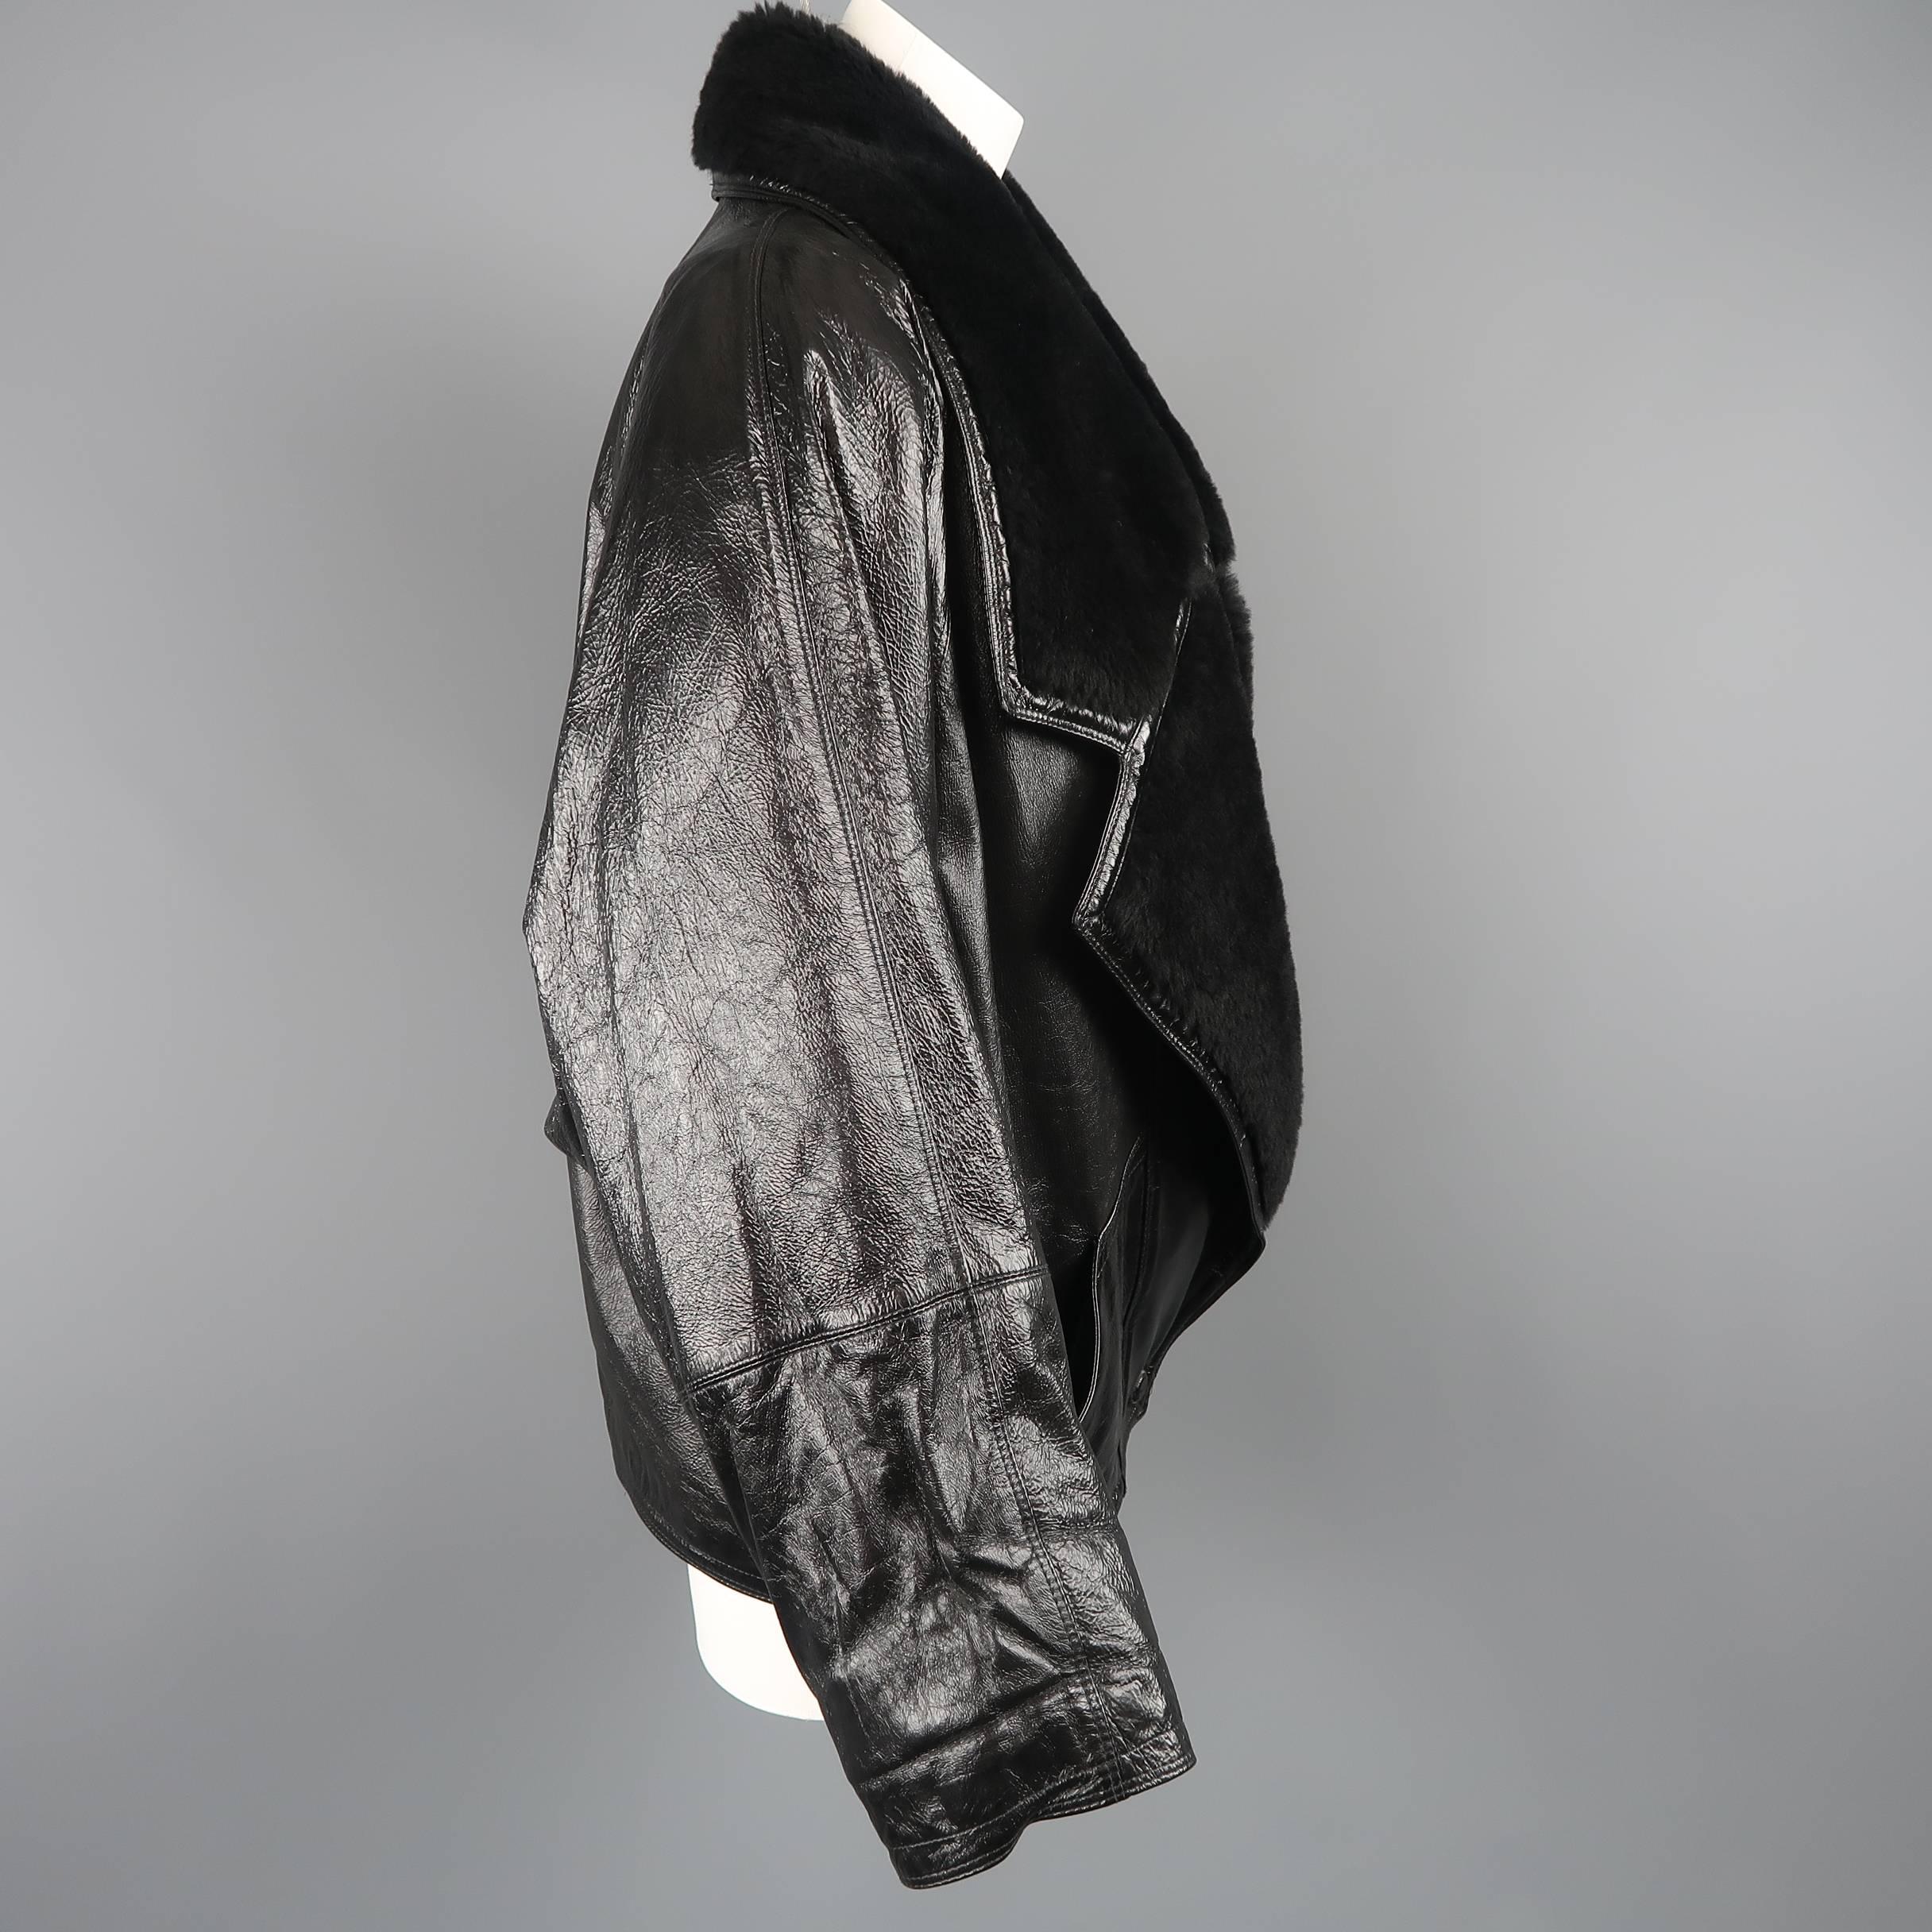 Gianni Versace Coat - Vintage Black Leather Shearling Collar, 1980s Jacket 2